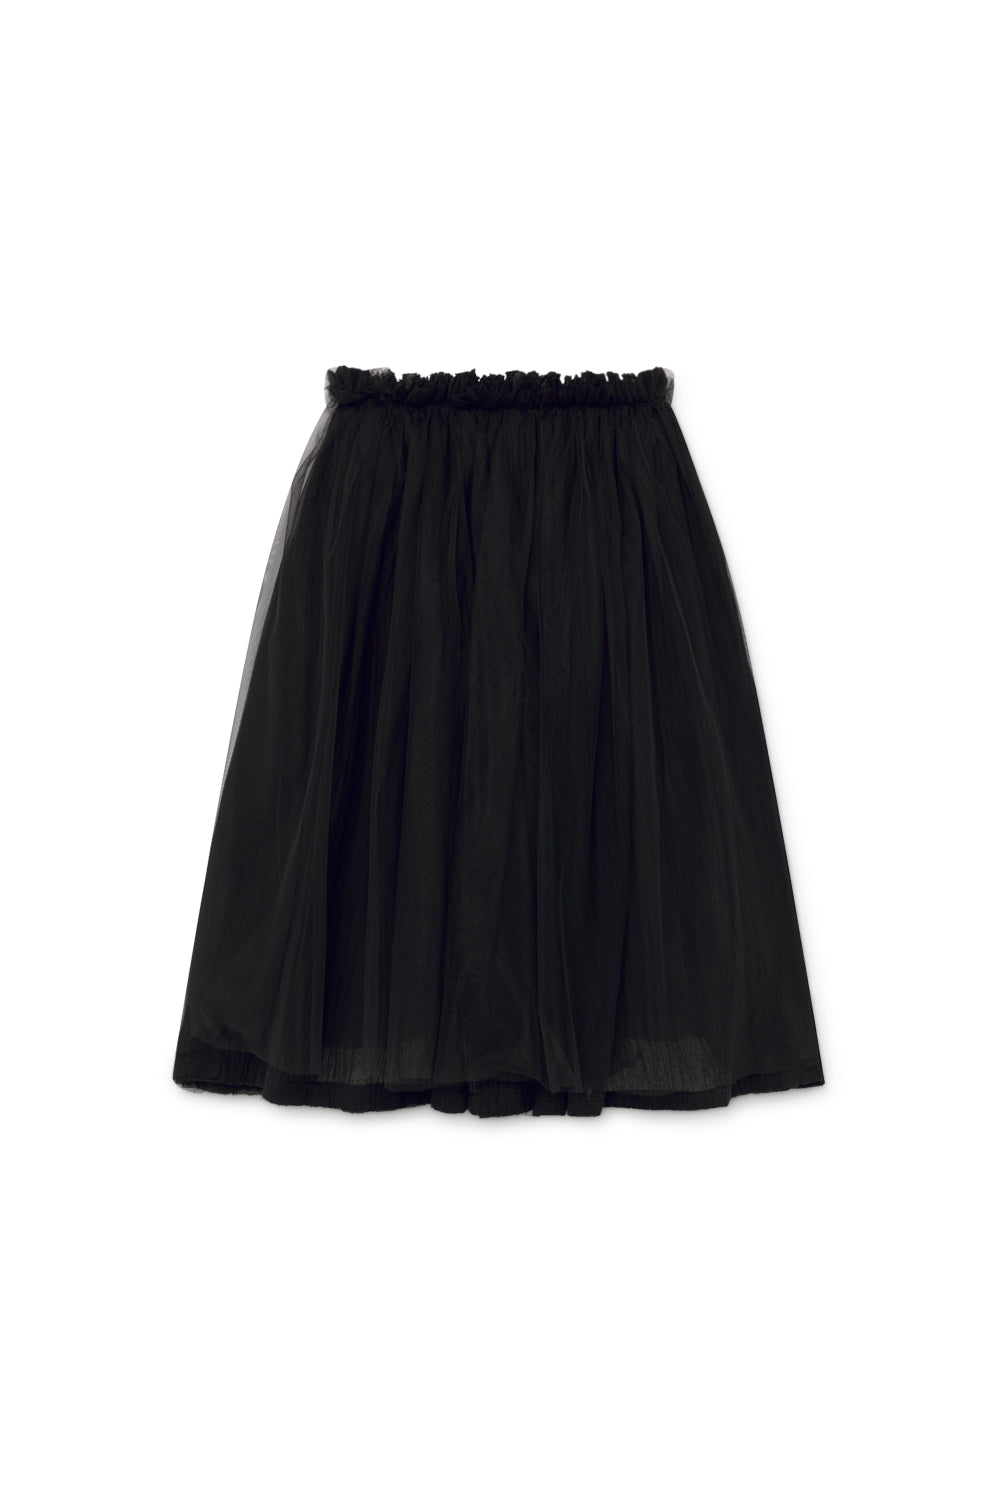 Little Creative Factory Muslin Fairy Wrap Skirt - Black